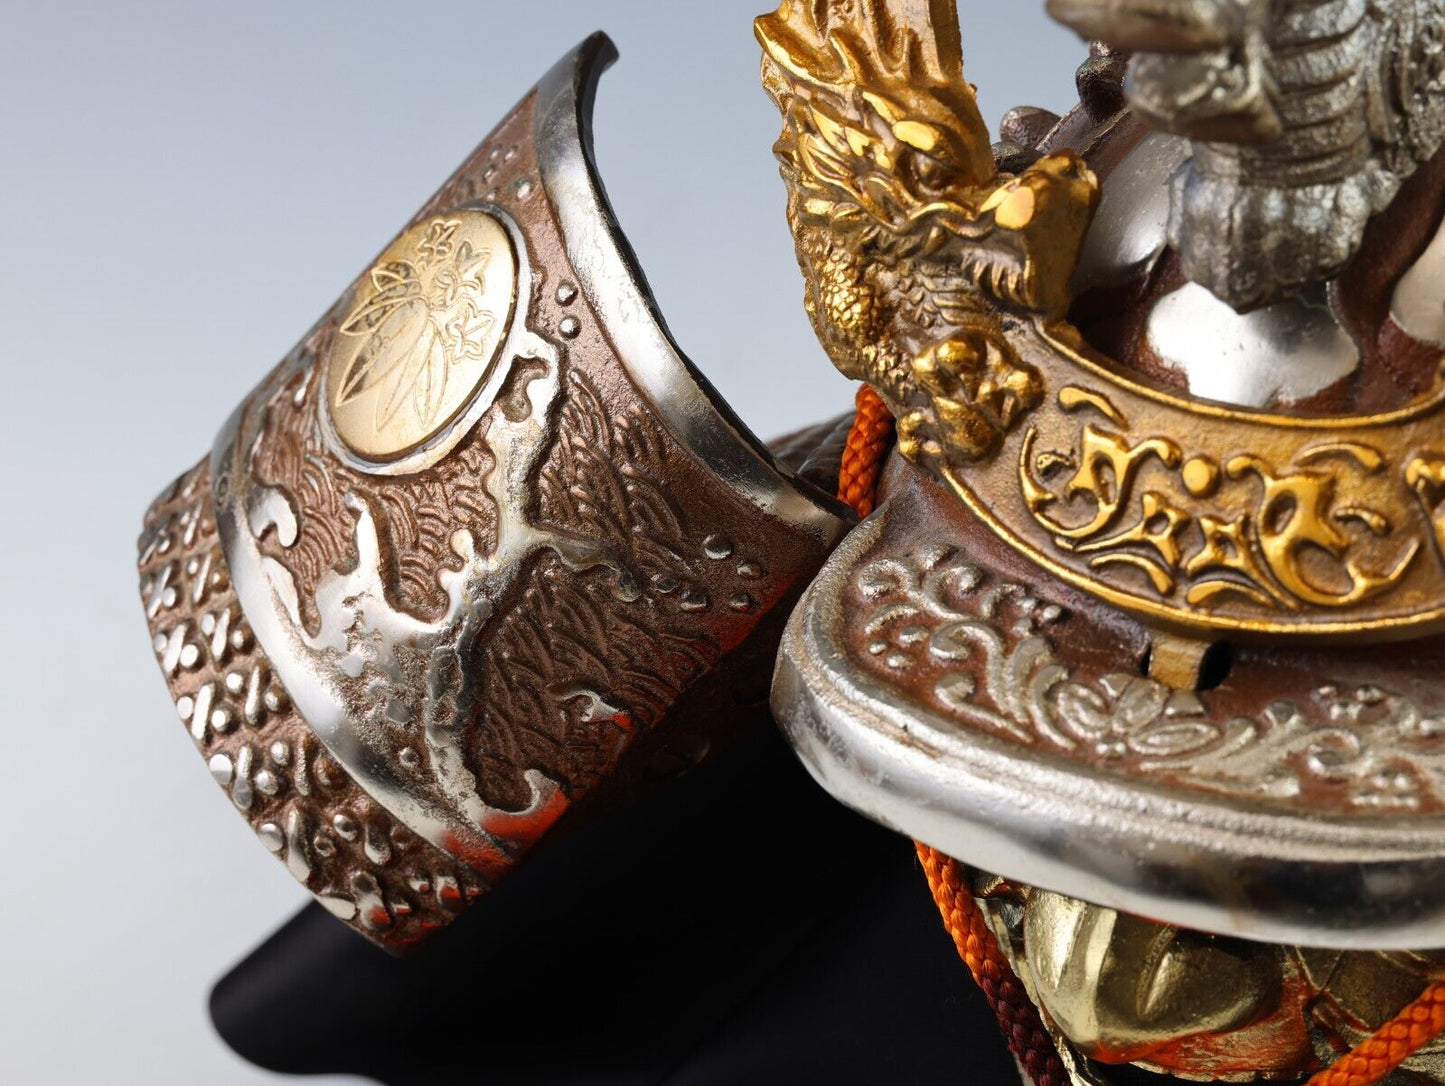 Japanese Old Kabuto Helmet Collectible Samurai Armor Head Protection.